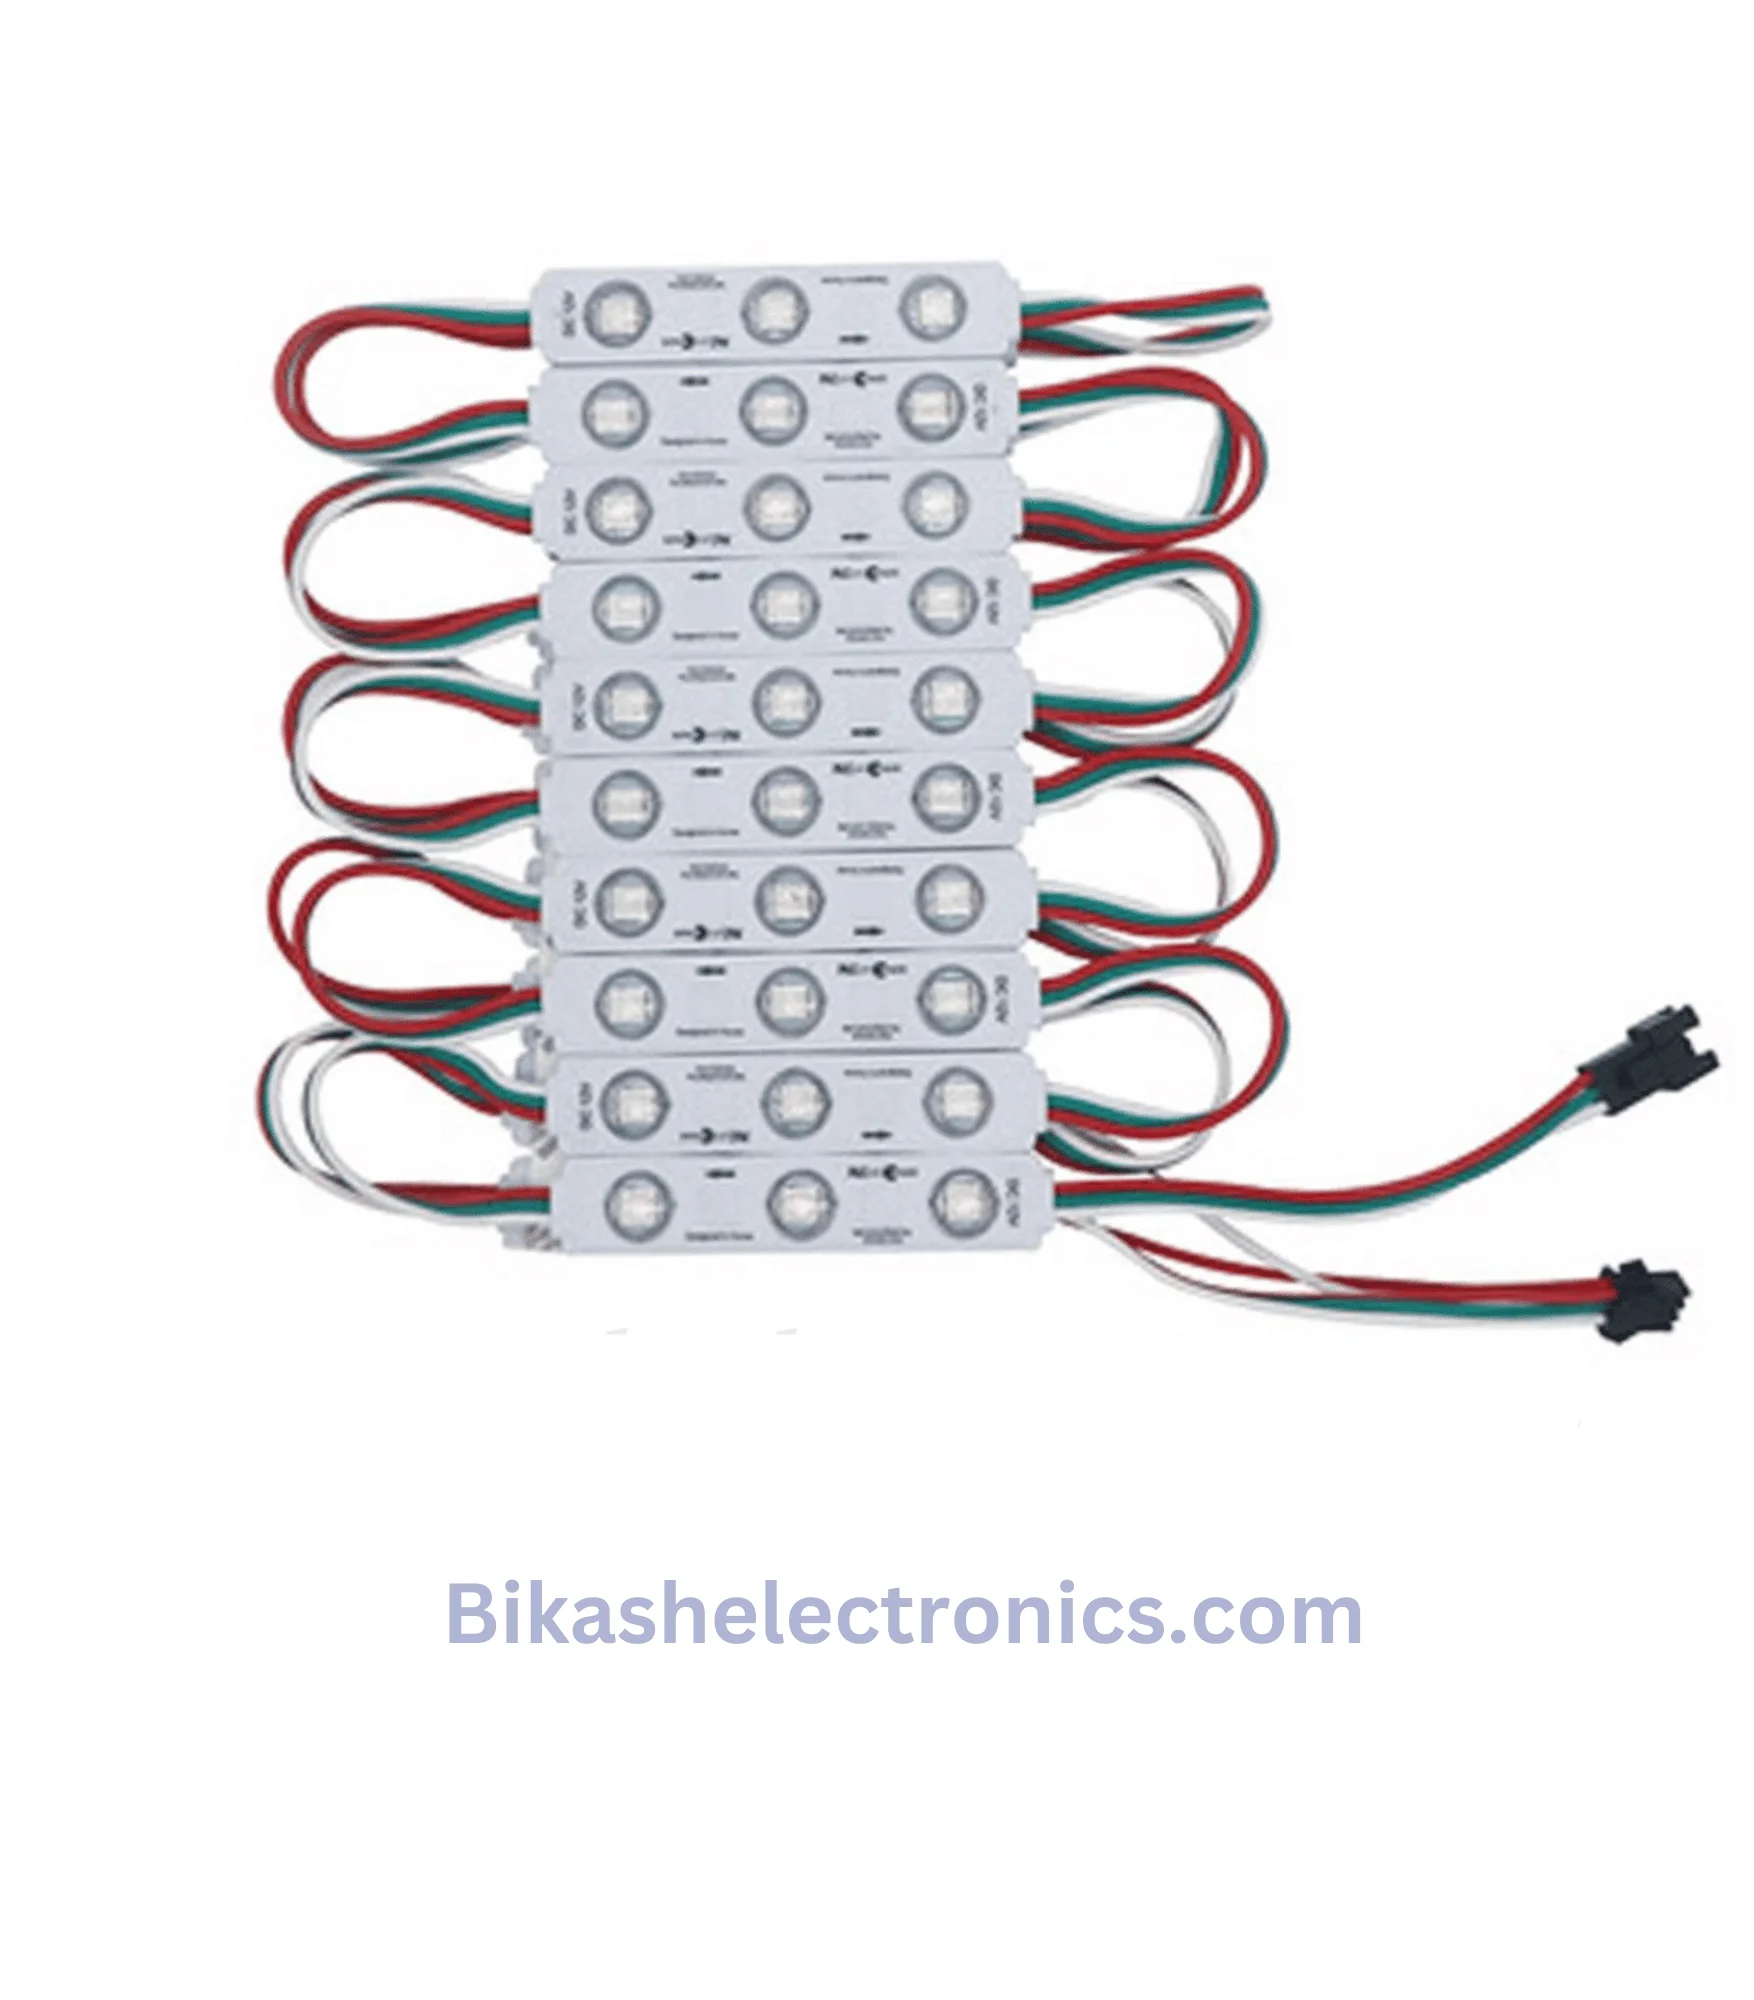 Pixel led WS2811 12 volt RGB led module - Bikash Electronics